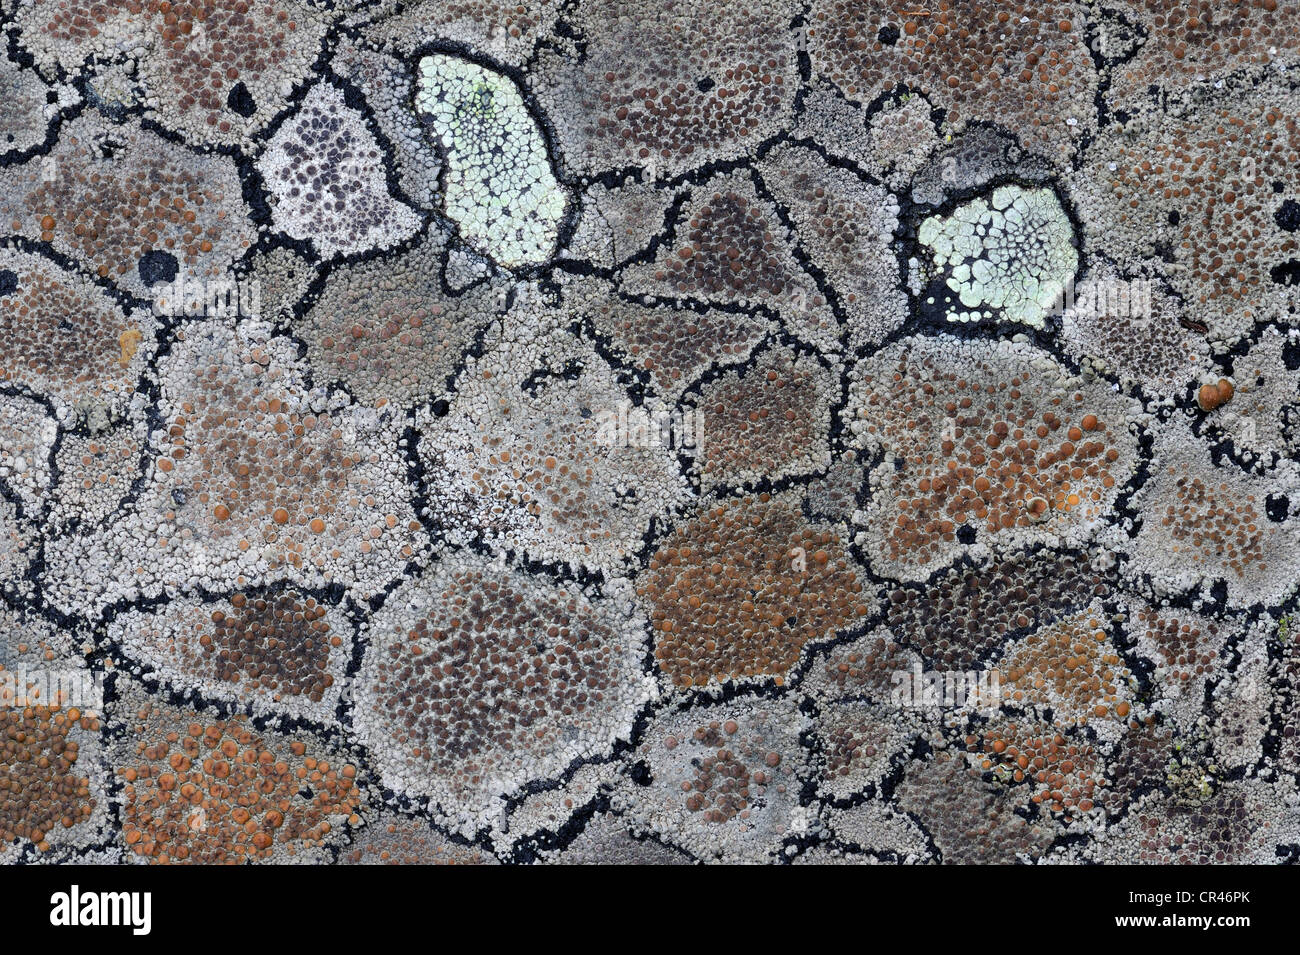 Crustose lichen patterns on stone, northern Sweden, Scandinavia, Europe Stock Photo